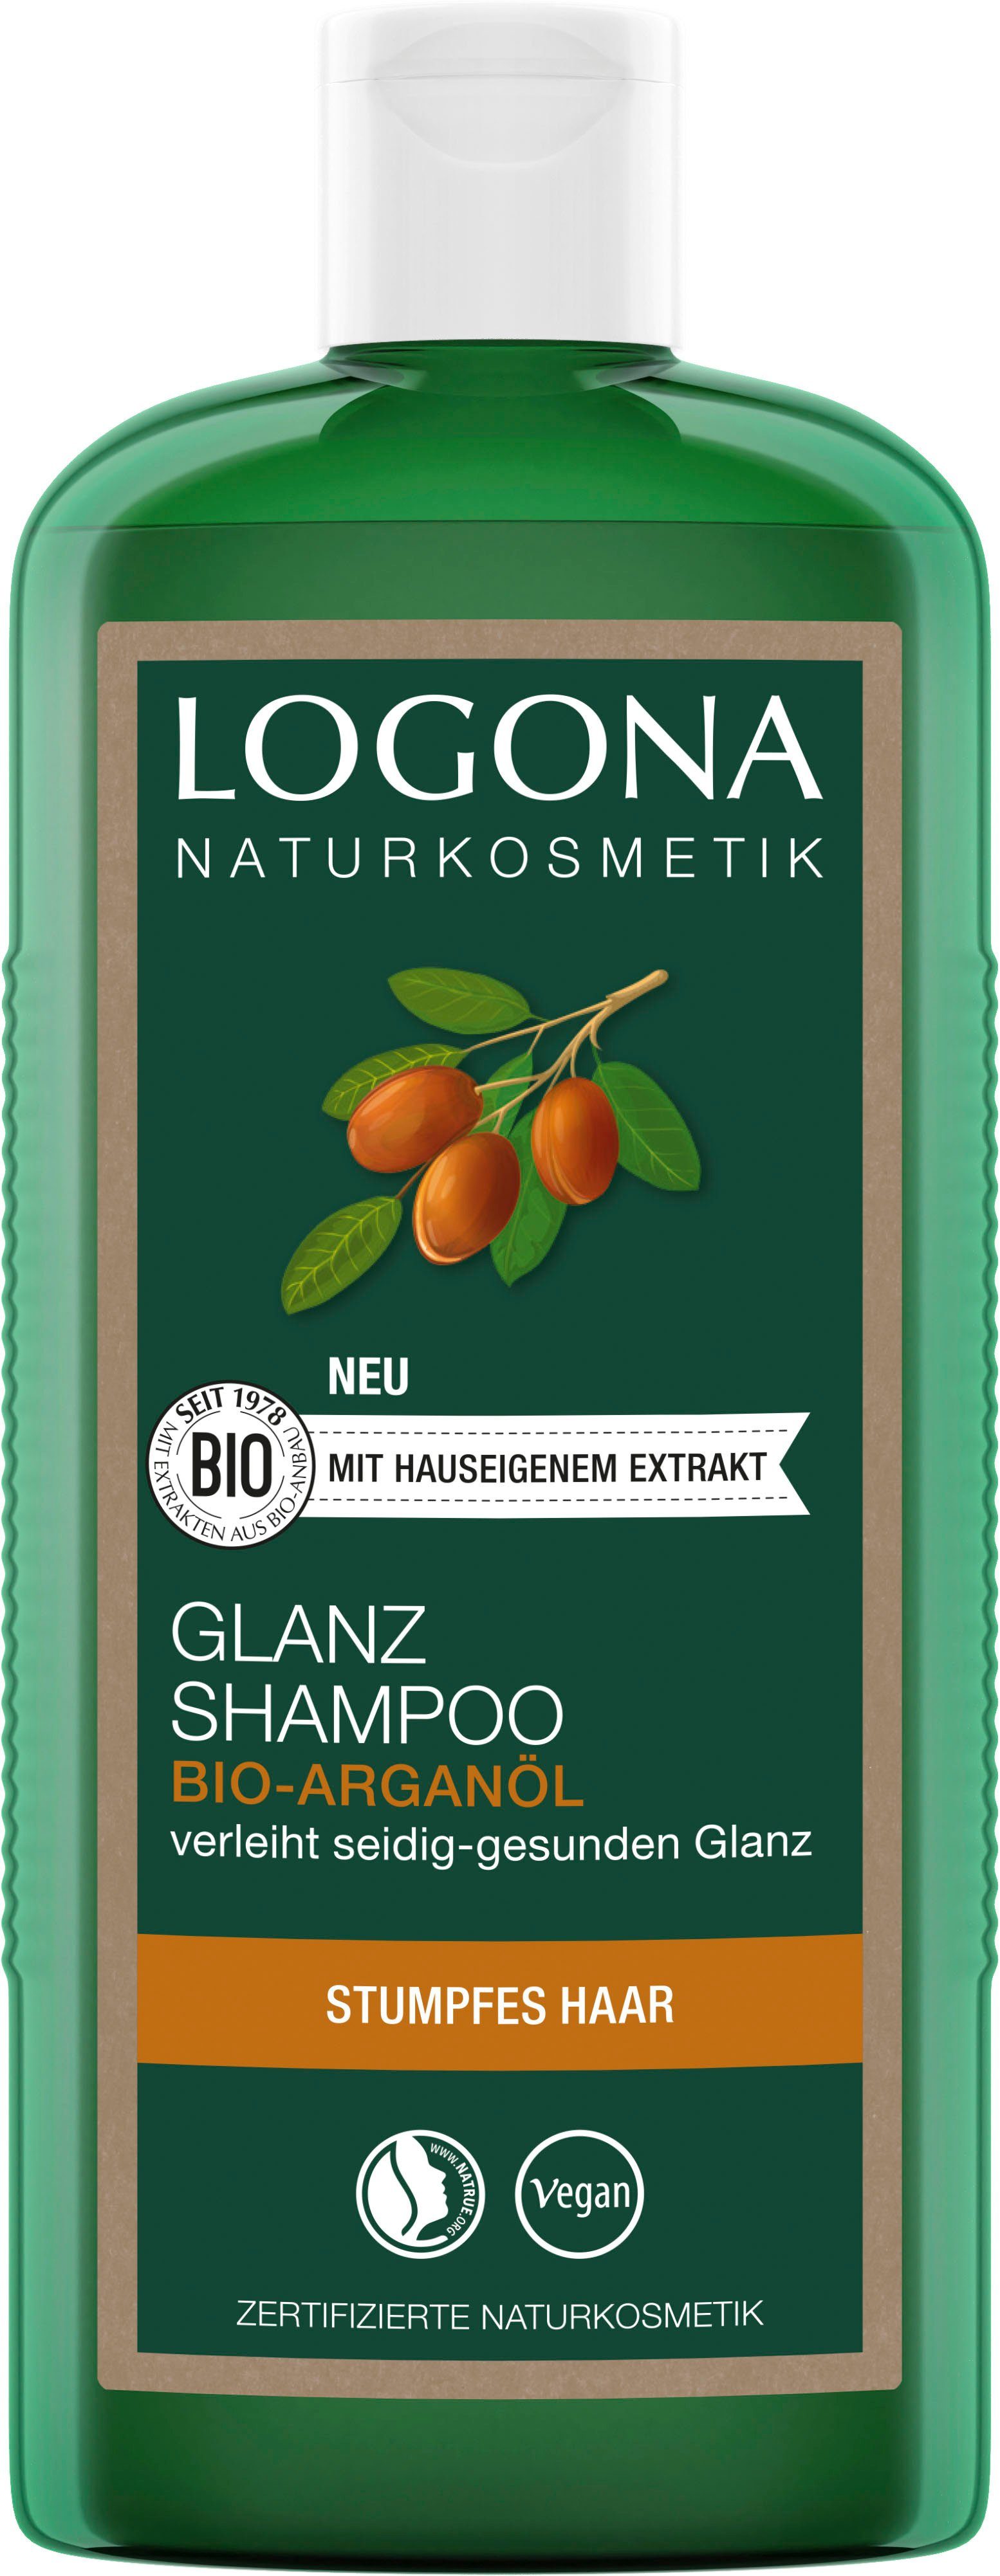 [VERKAUF] LOGONA Haarshampoo Logona Shampoo Glanz Bio-Arganöl